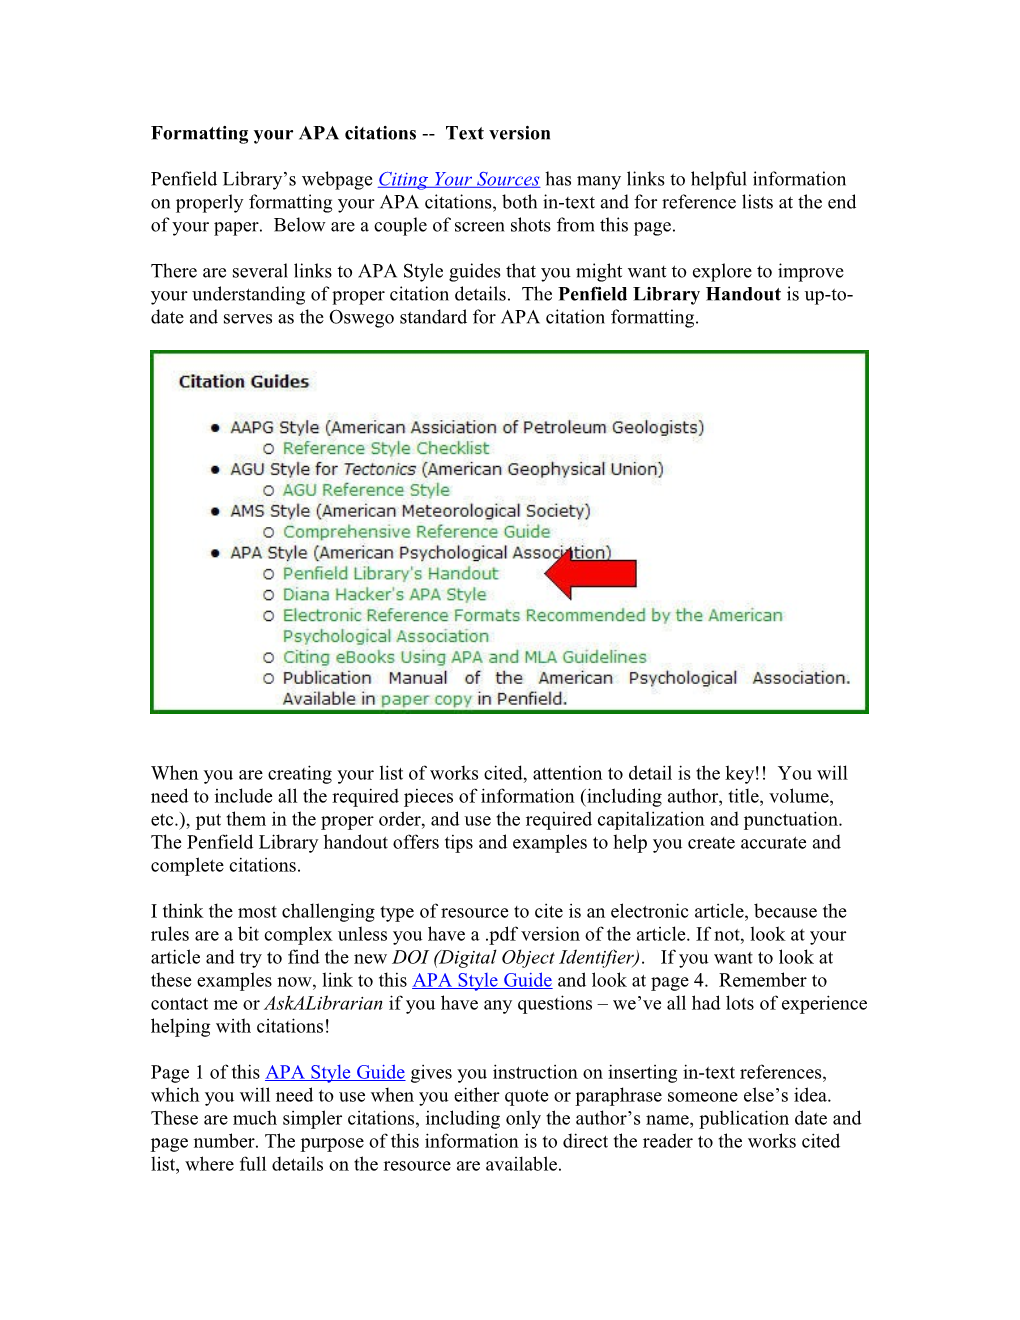 Formatting Your APA Citations -- Text Version